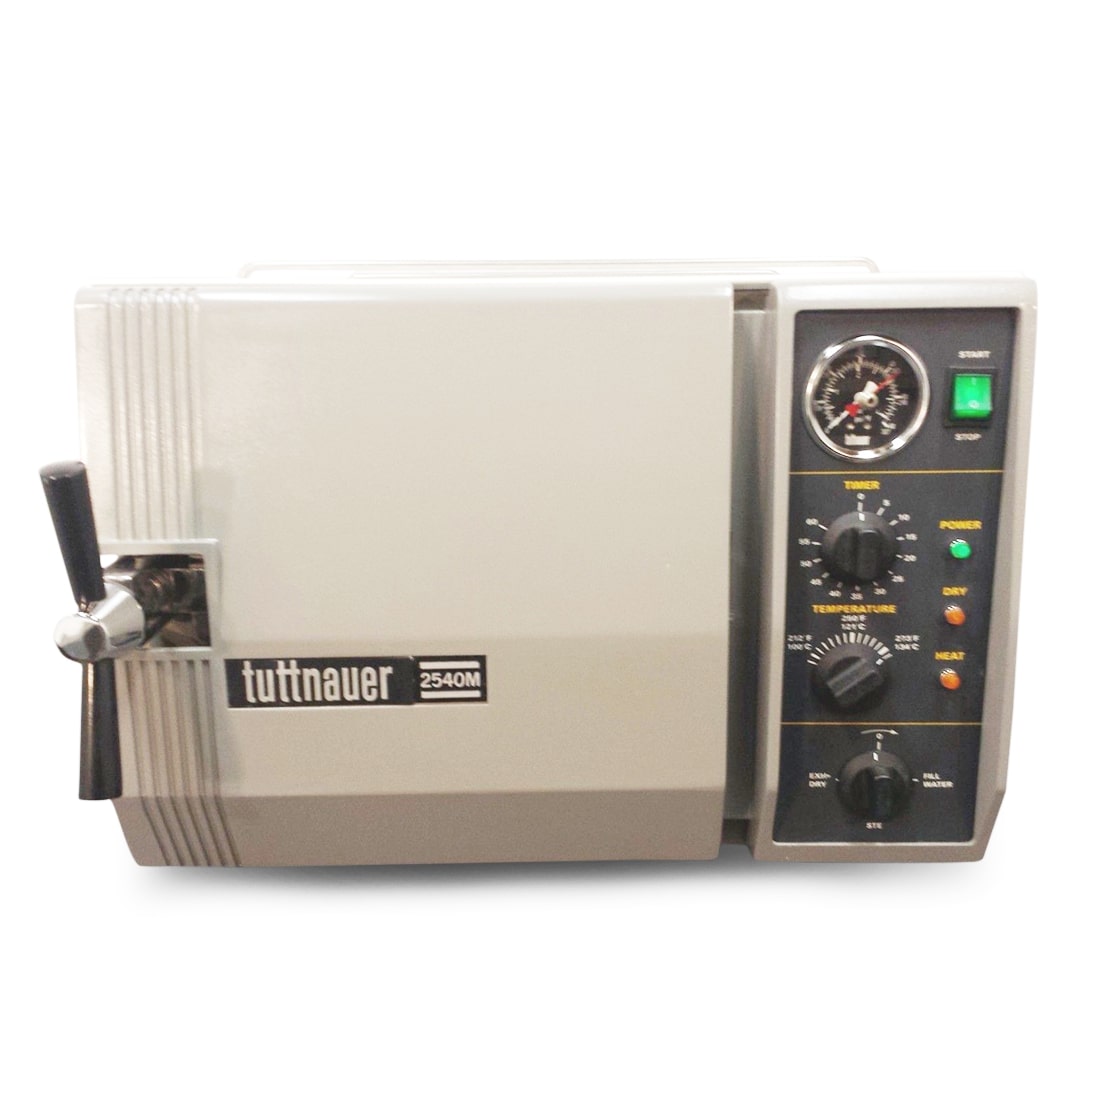 Tuttnauer 2540M - Autoclave Manual Sterilizer